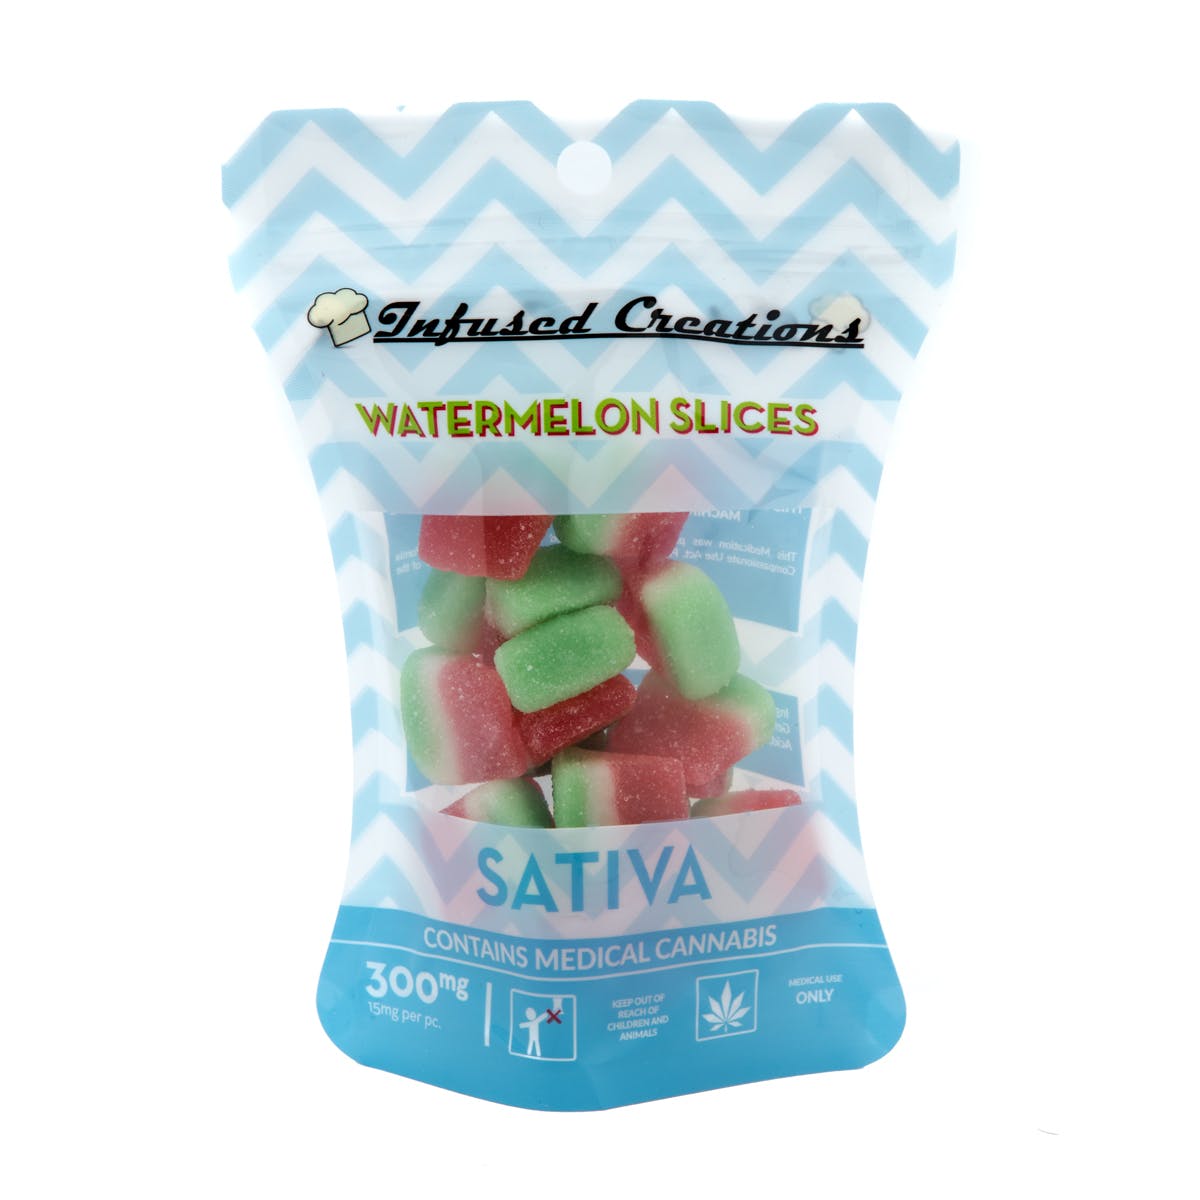 Watermelon Slices Sativa, 300mg